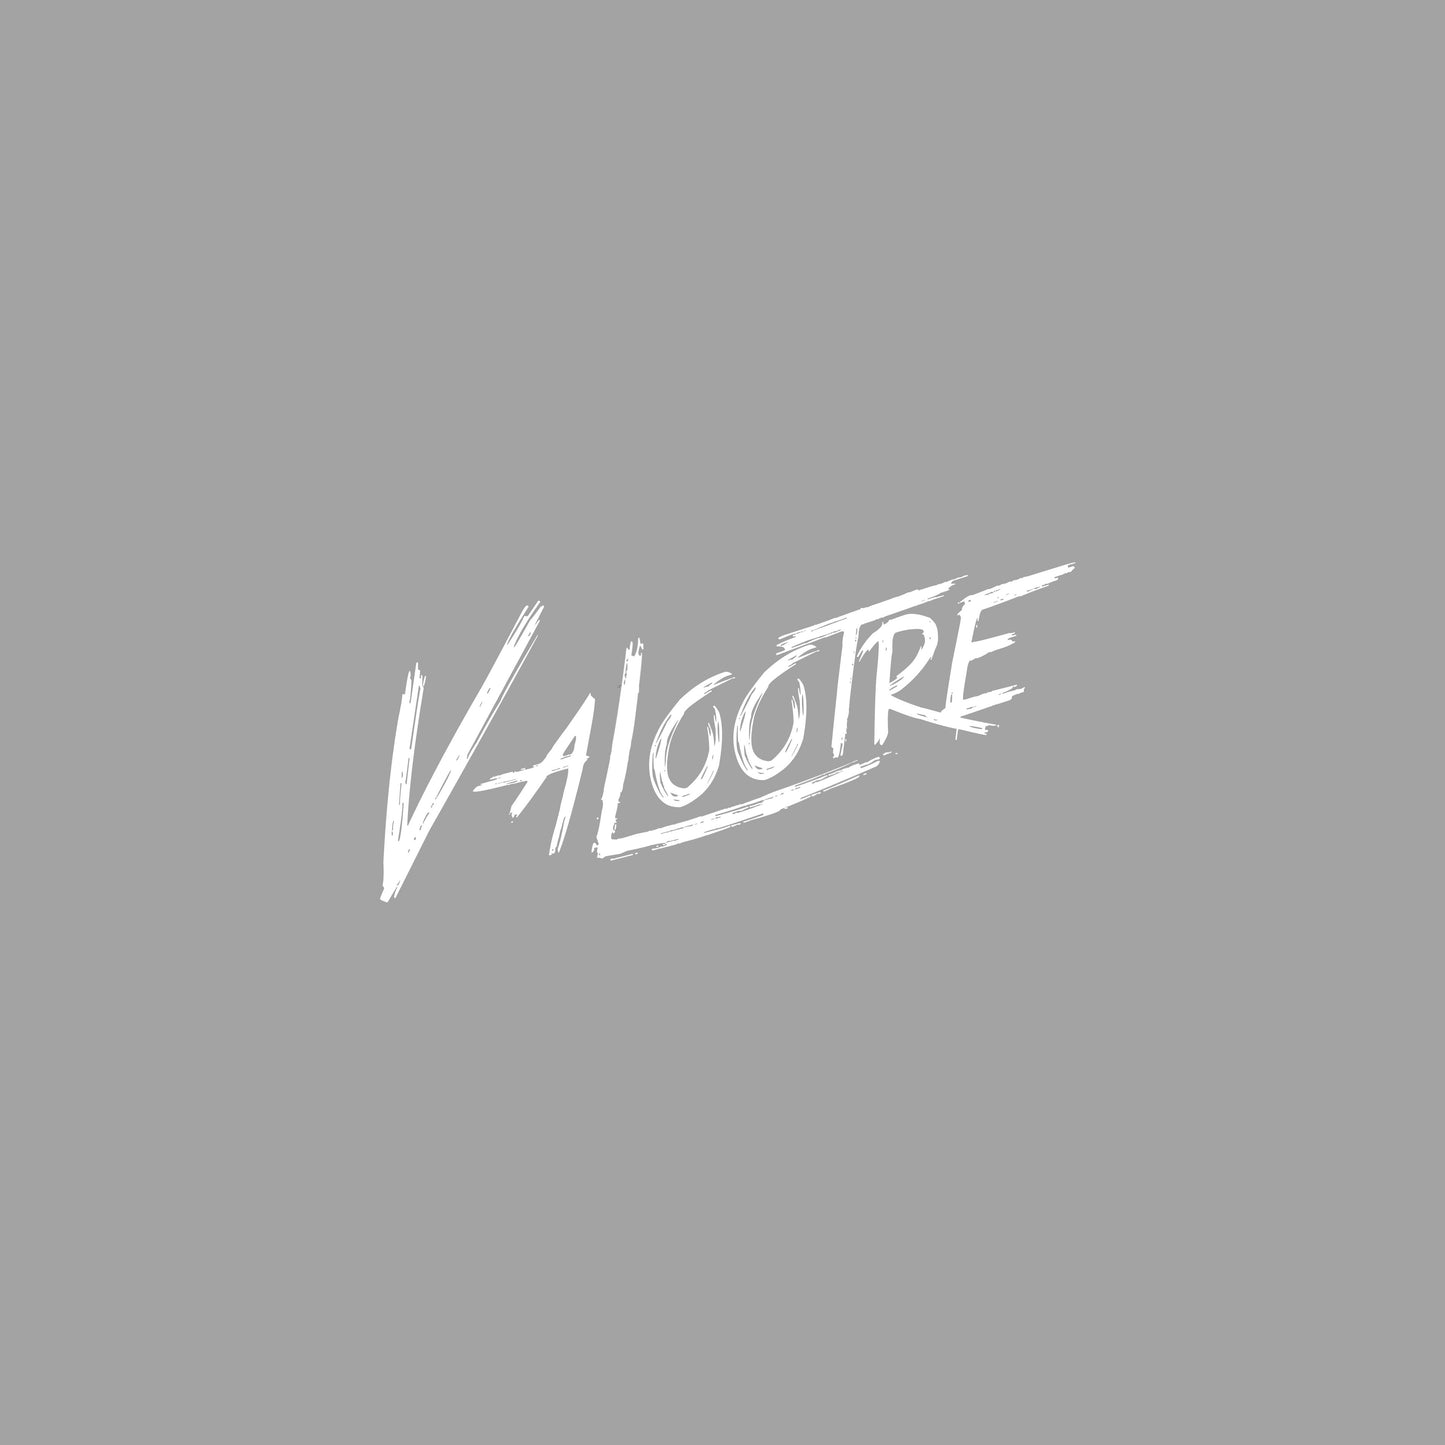 Sticker "Valootre" blanc